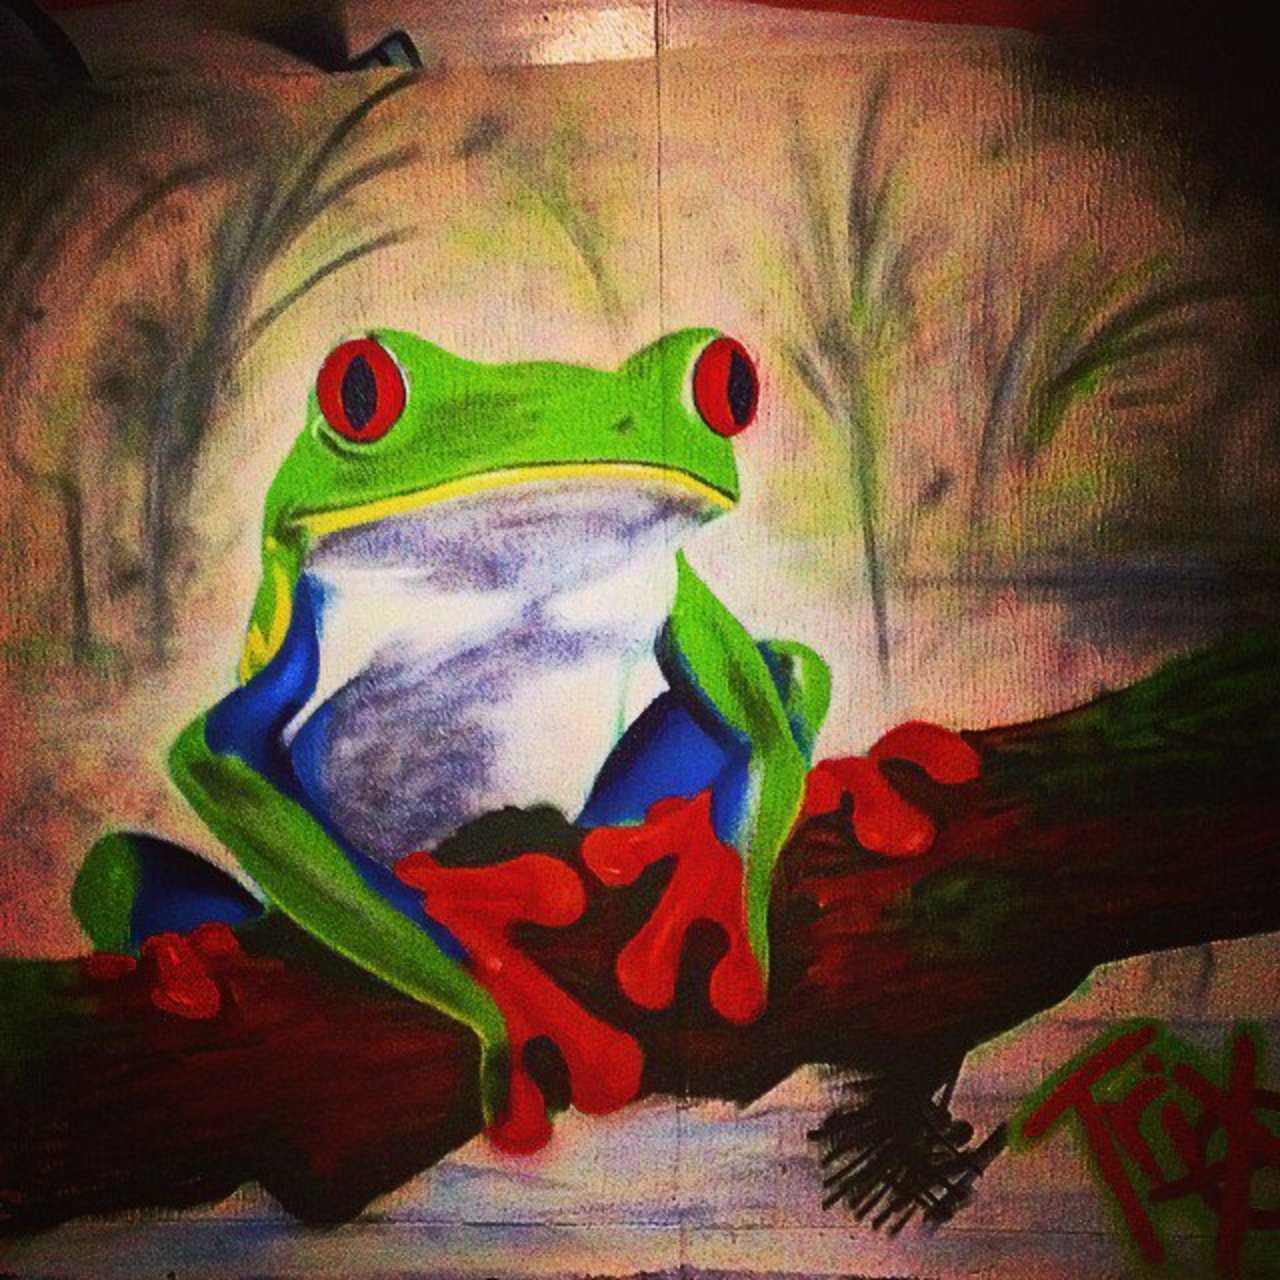 cute rainforest frog found in #Gloucester by artist Trix @rtglos #streetart #graffiti #photography https://t.co/R9Rr7kEeSB